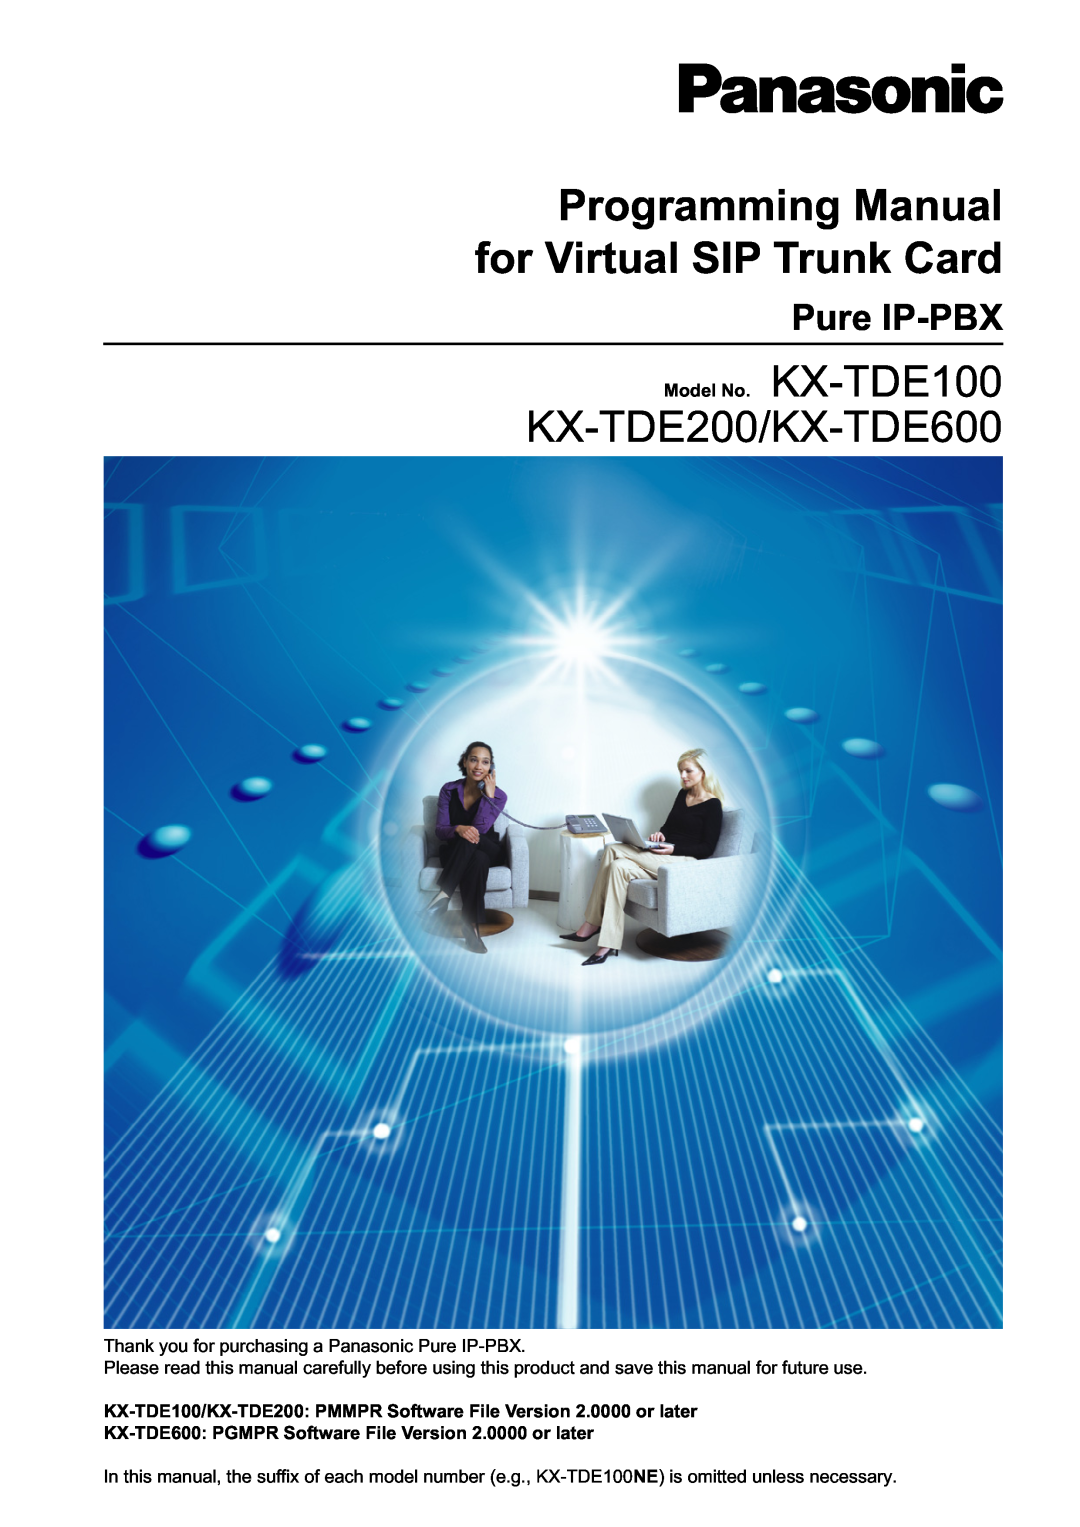 Panasonic KX-TDE100 manual Pure IP-PBX, Programming Manual for Virtual SIP Trunk Card, KX-TDE200/KX-TDE600 